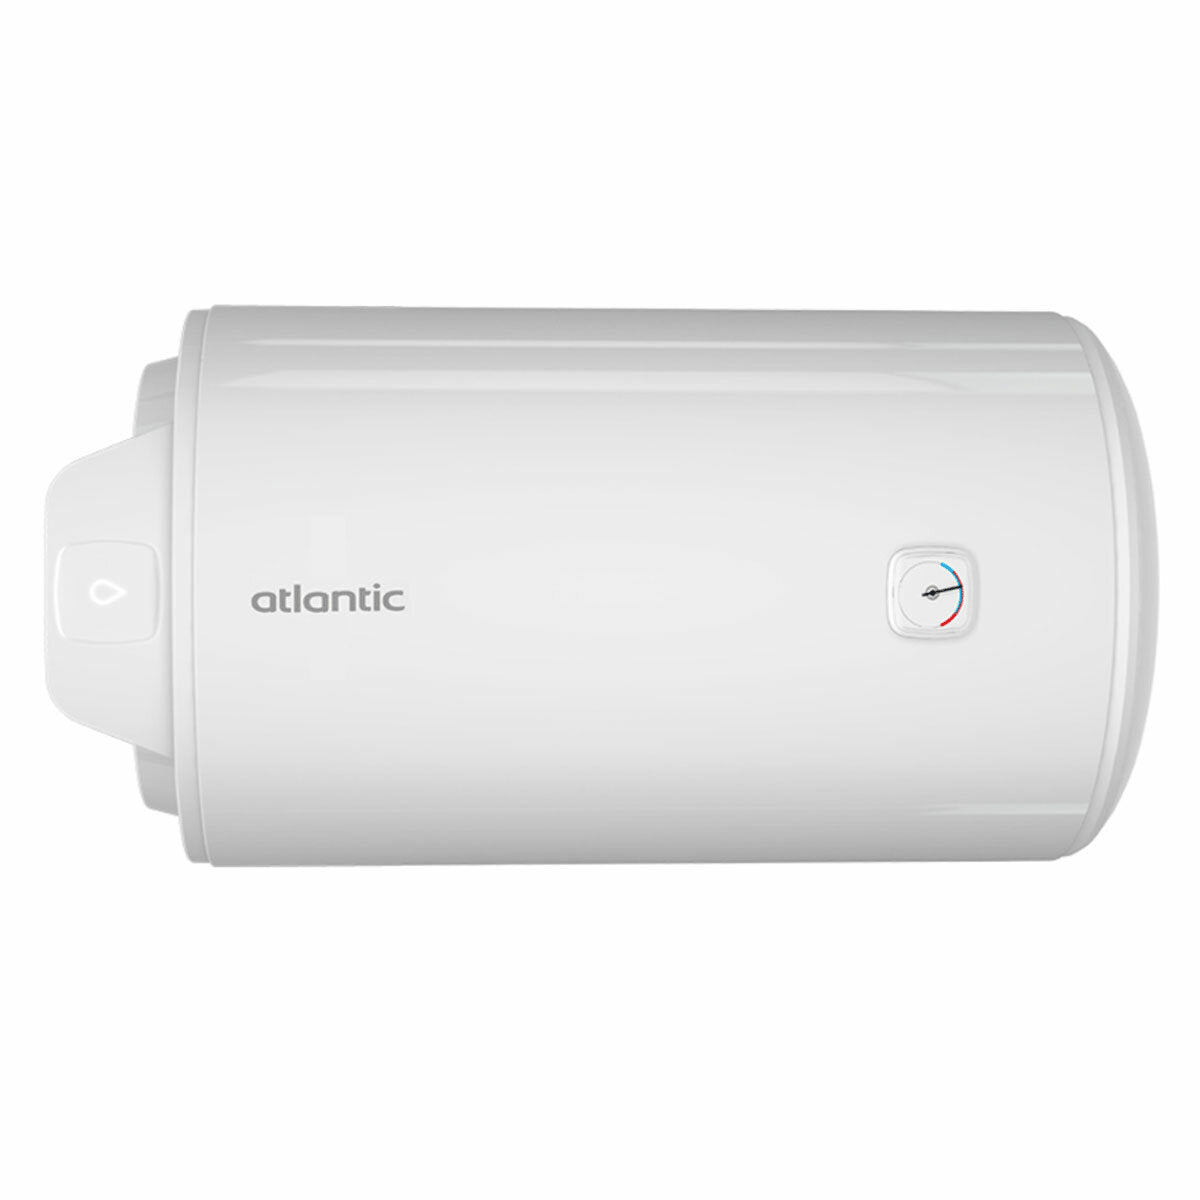 Atlantic EGO 50 horizontal electric water heater 50 liters 2 year warranty